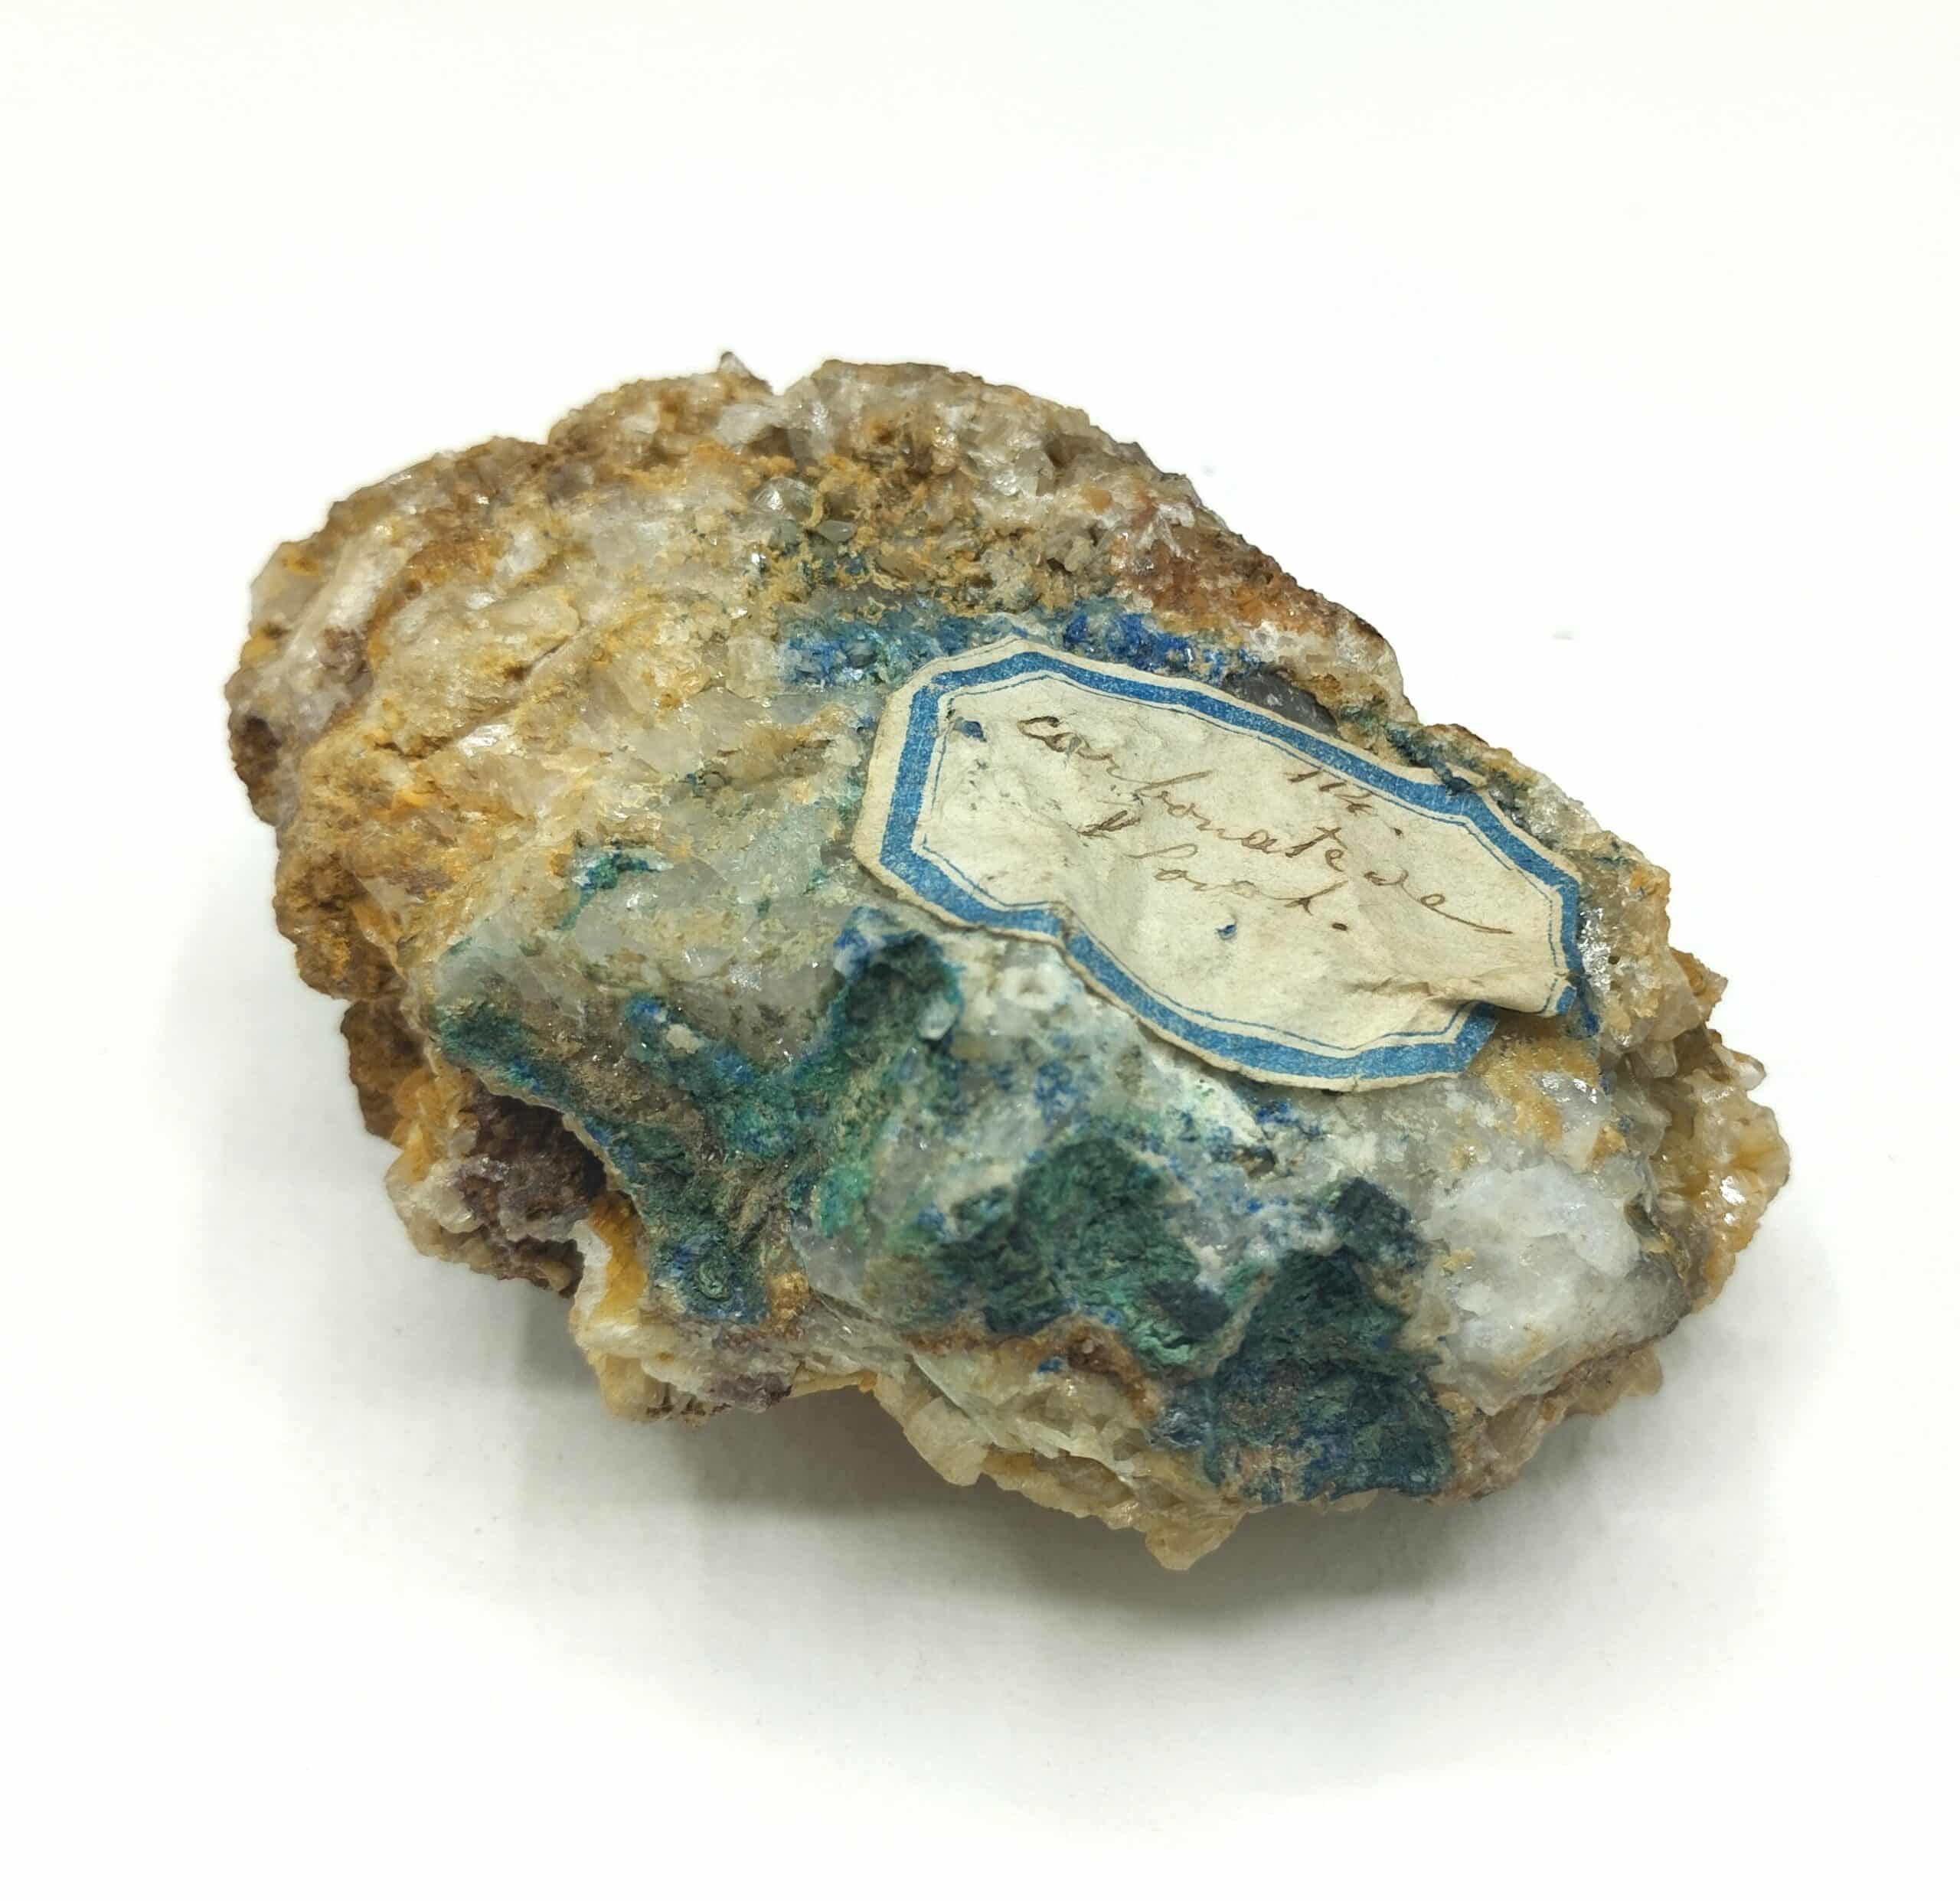 Cérusite, Linarite et Brochantite, M’Fouati, Congo RDC.